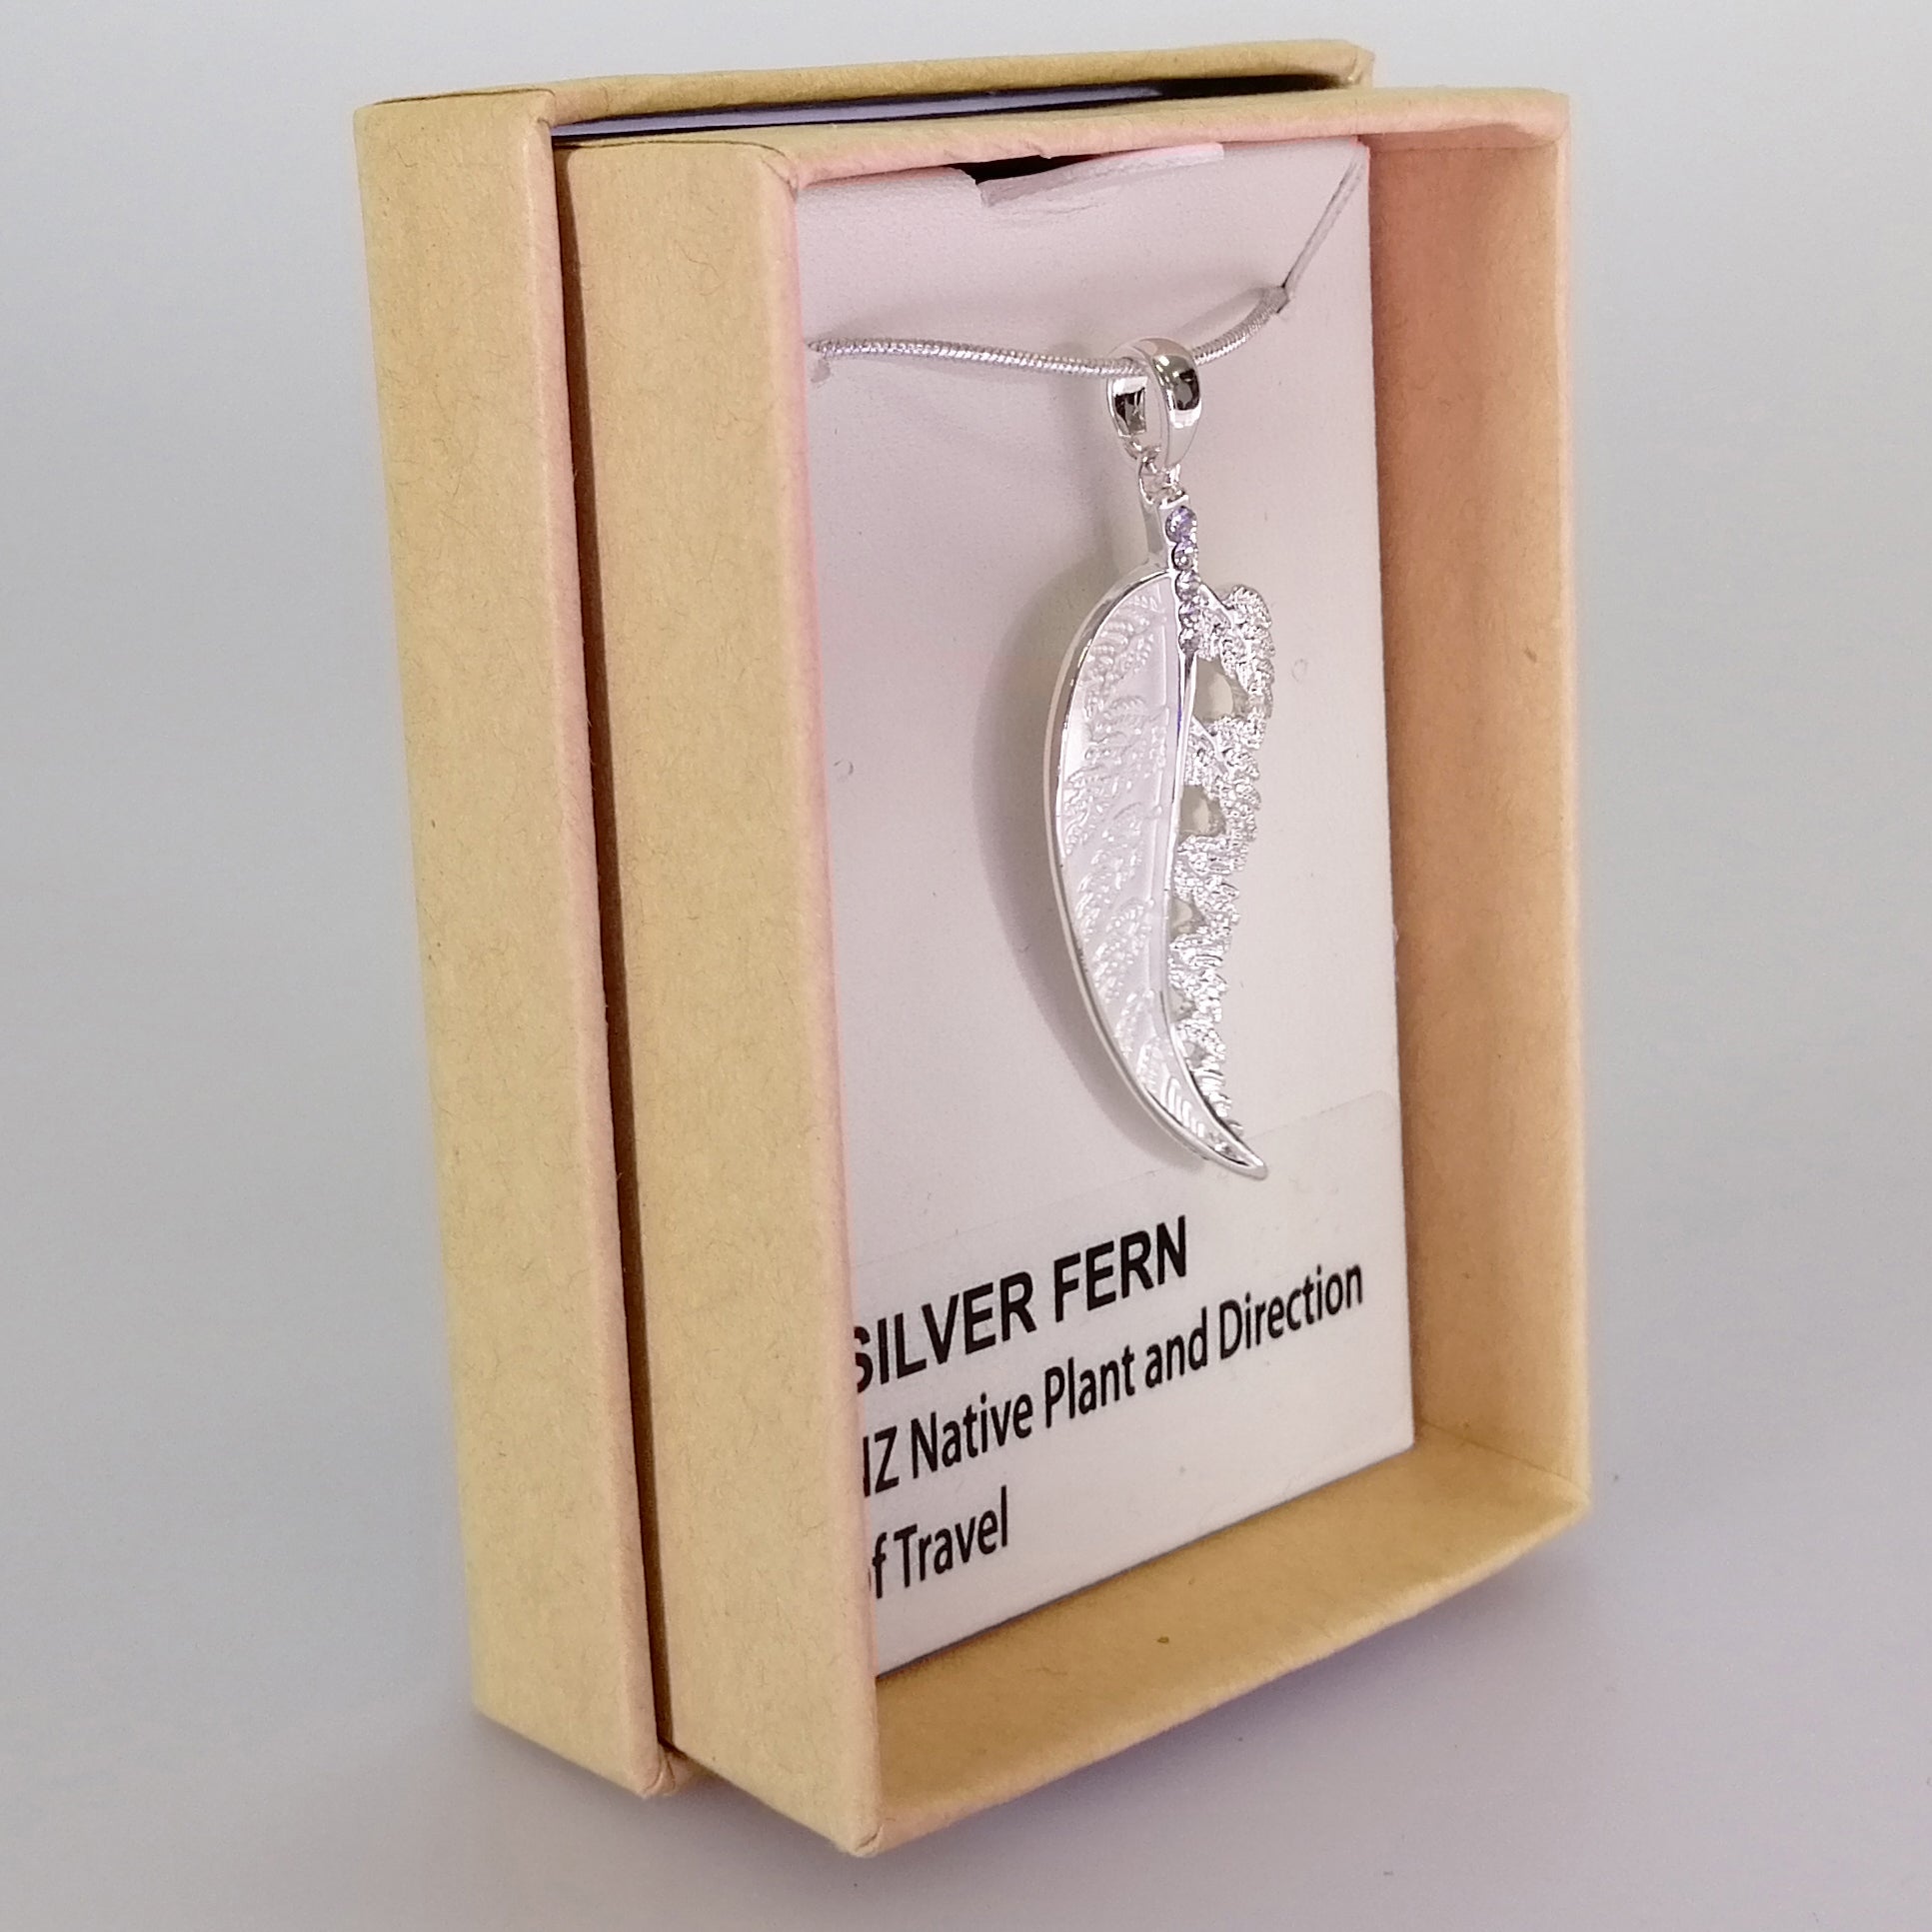 Kiwicraft - Silver-Look Fern Necklace